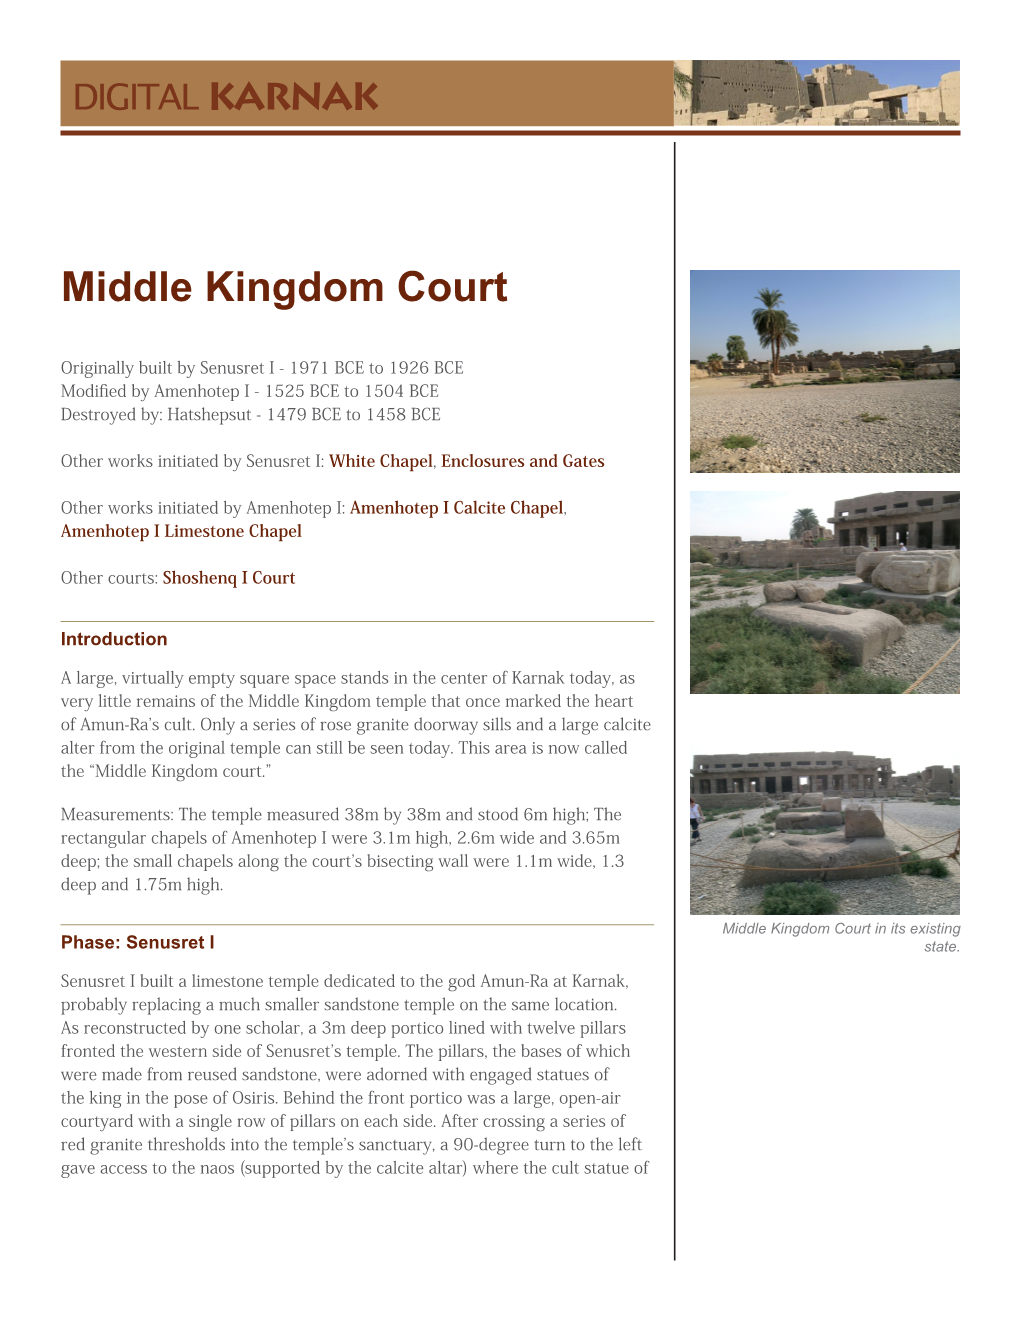 Middle Kingdom Court